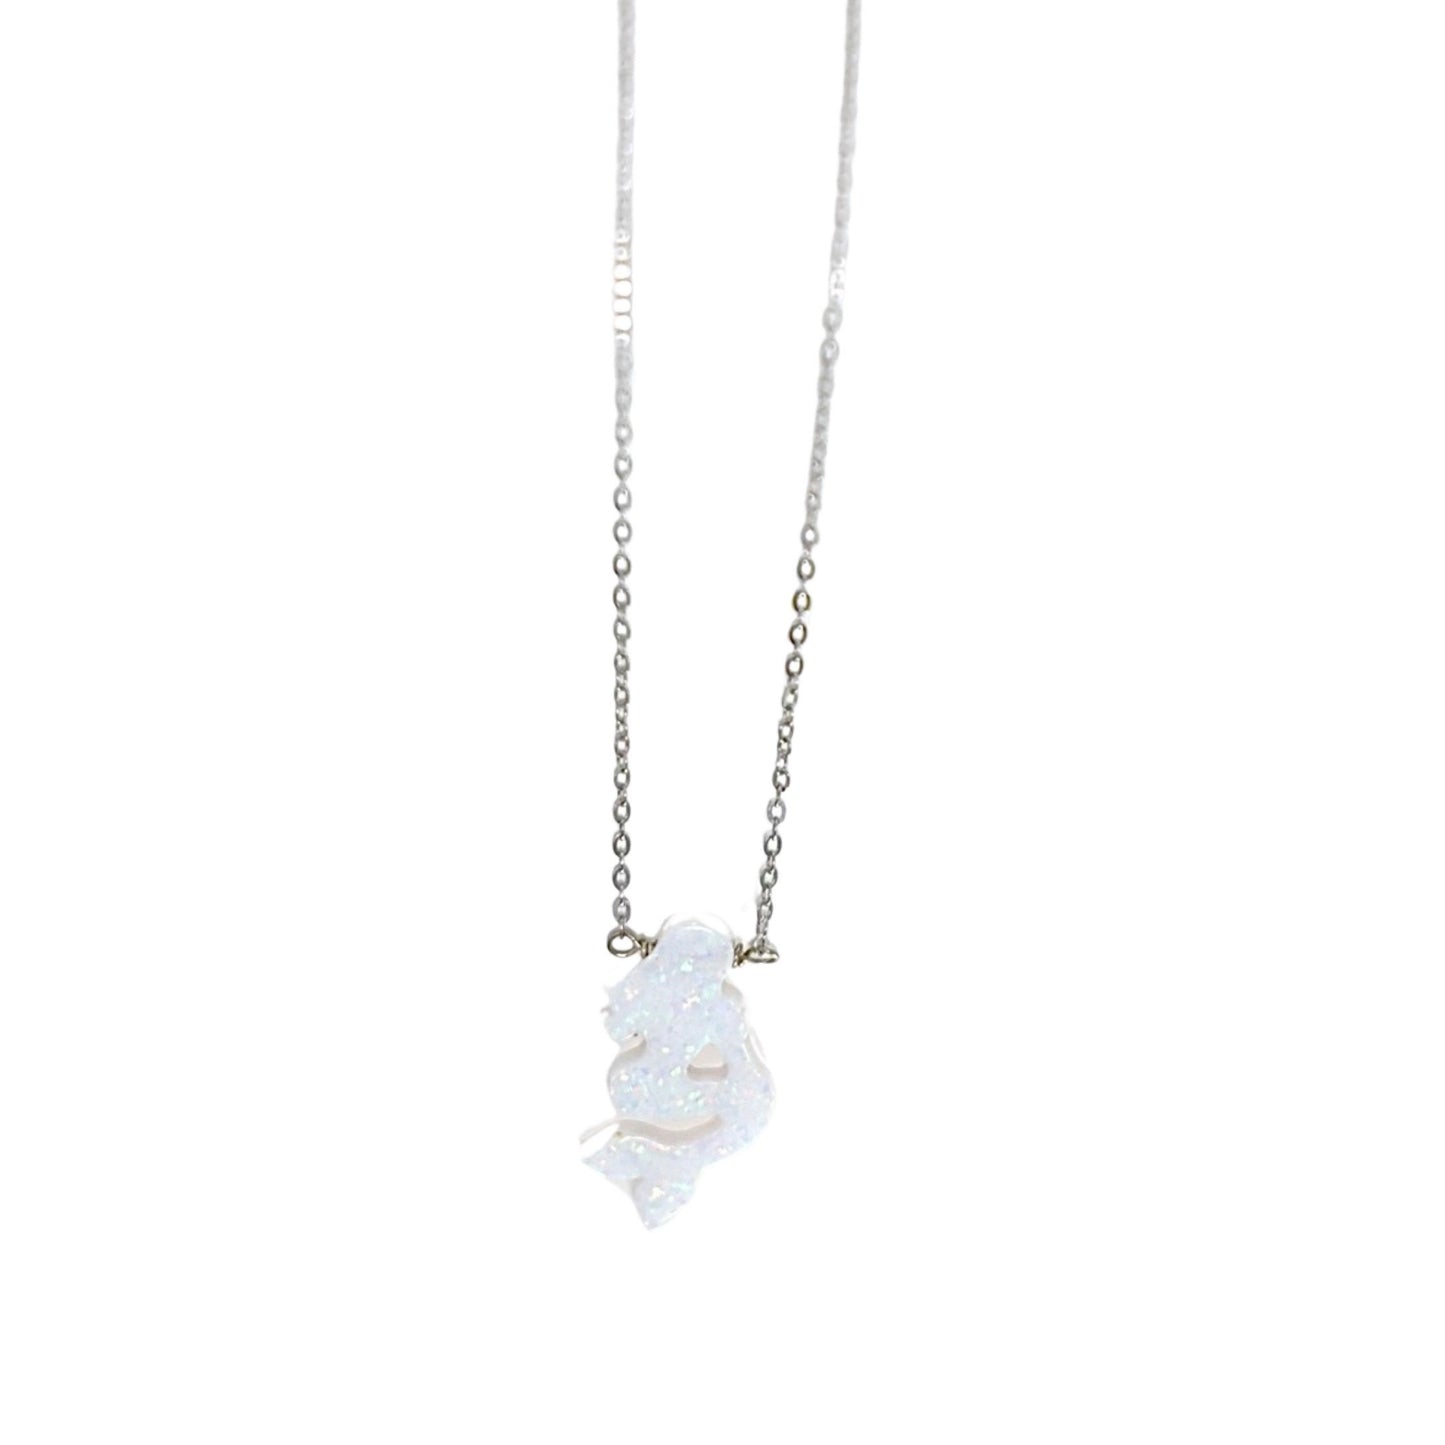 Aloha Bling "Mermaid White Opal" Necklace